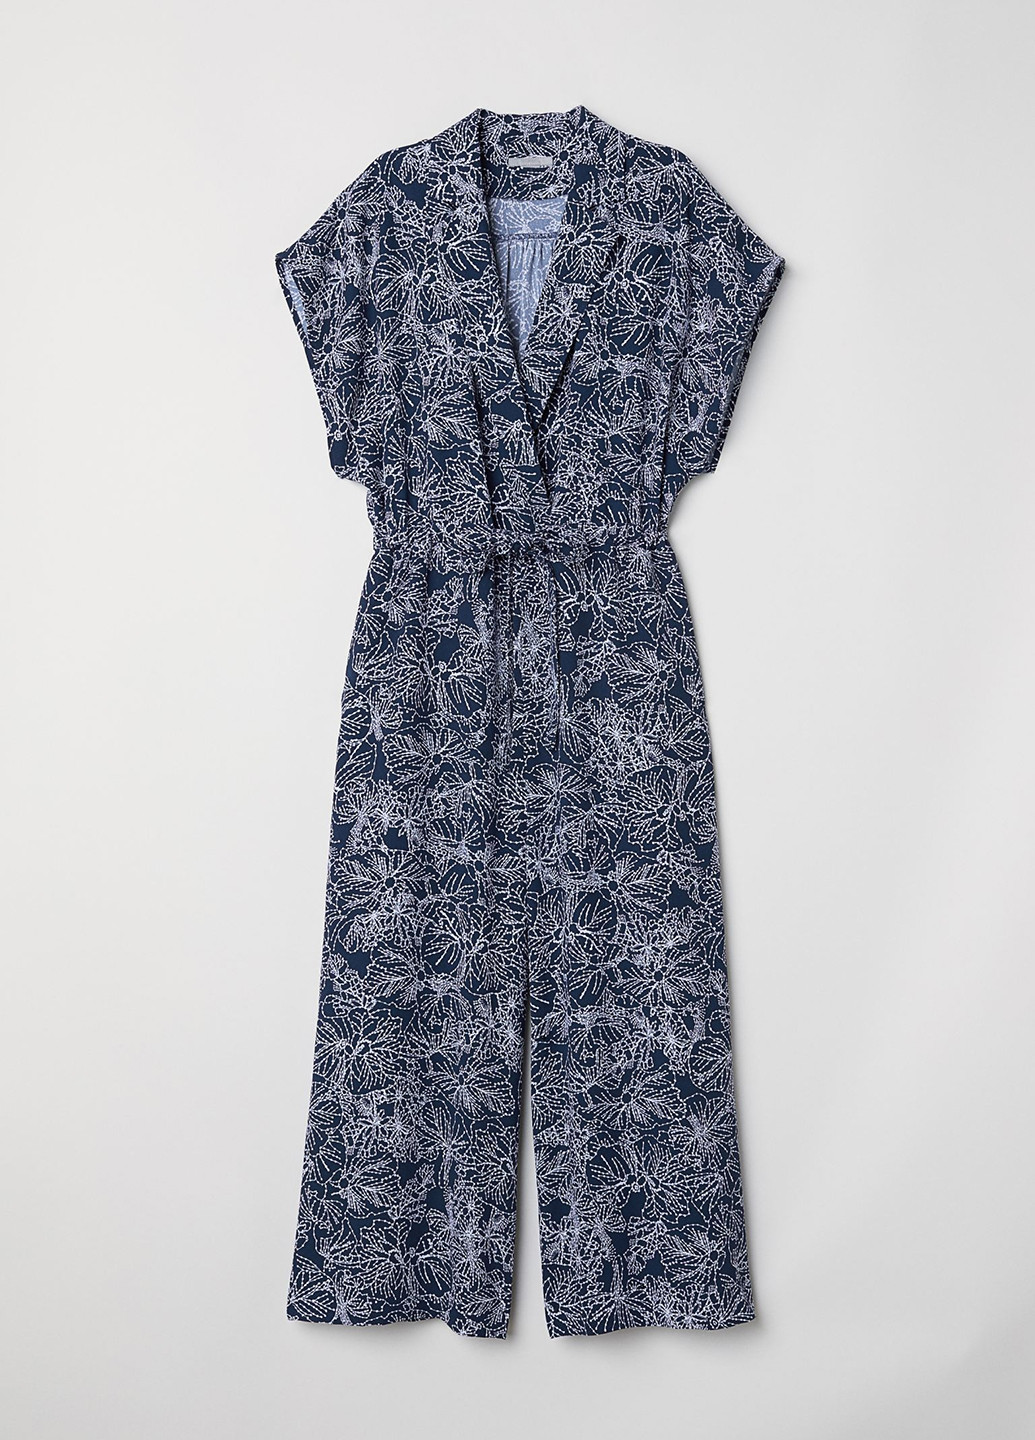 Комбинезон H&M комбинезон-брюки рисунок тёмно-синий кэжуал полиэстер